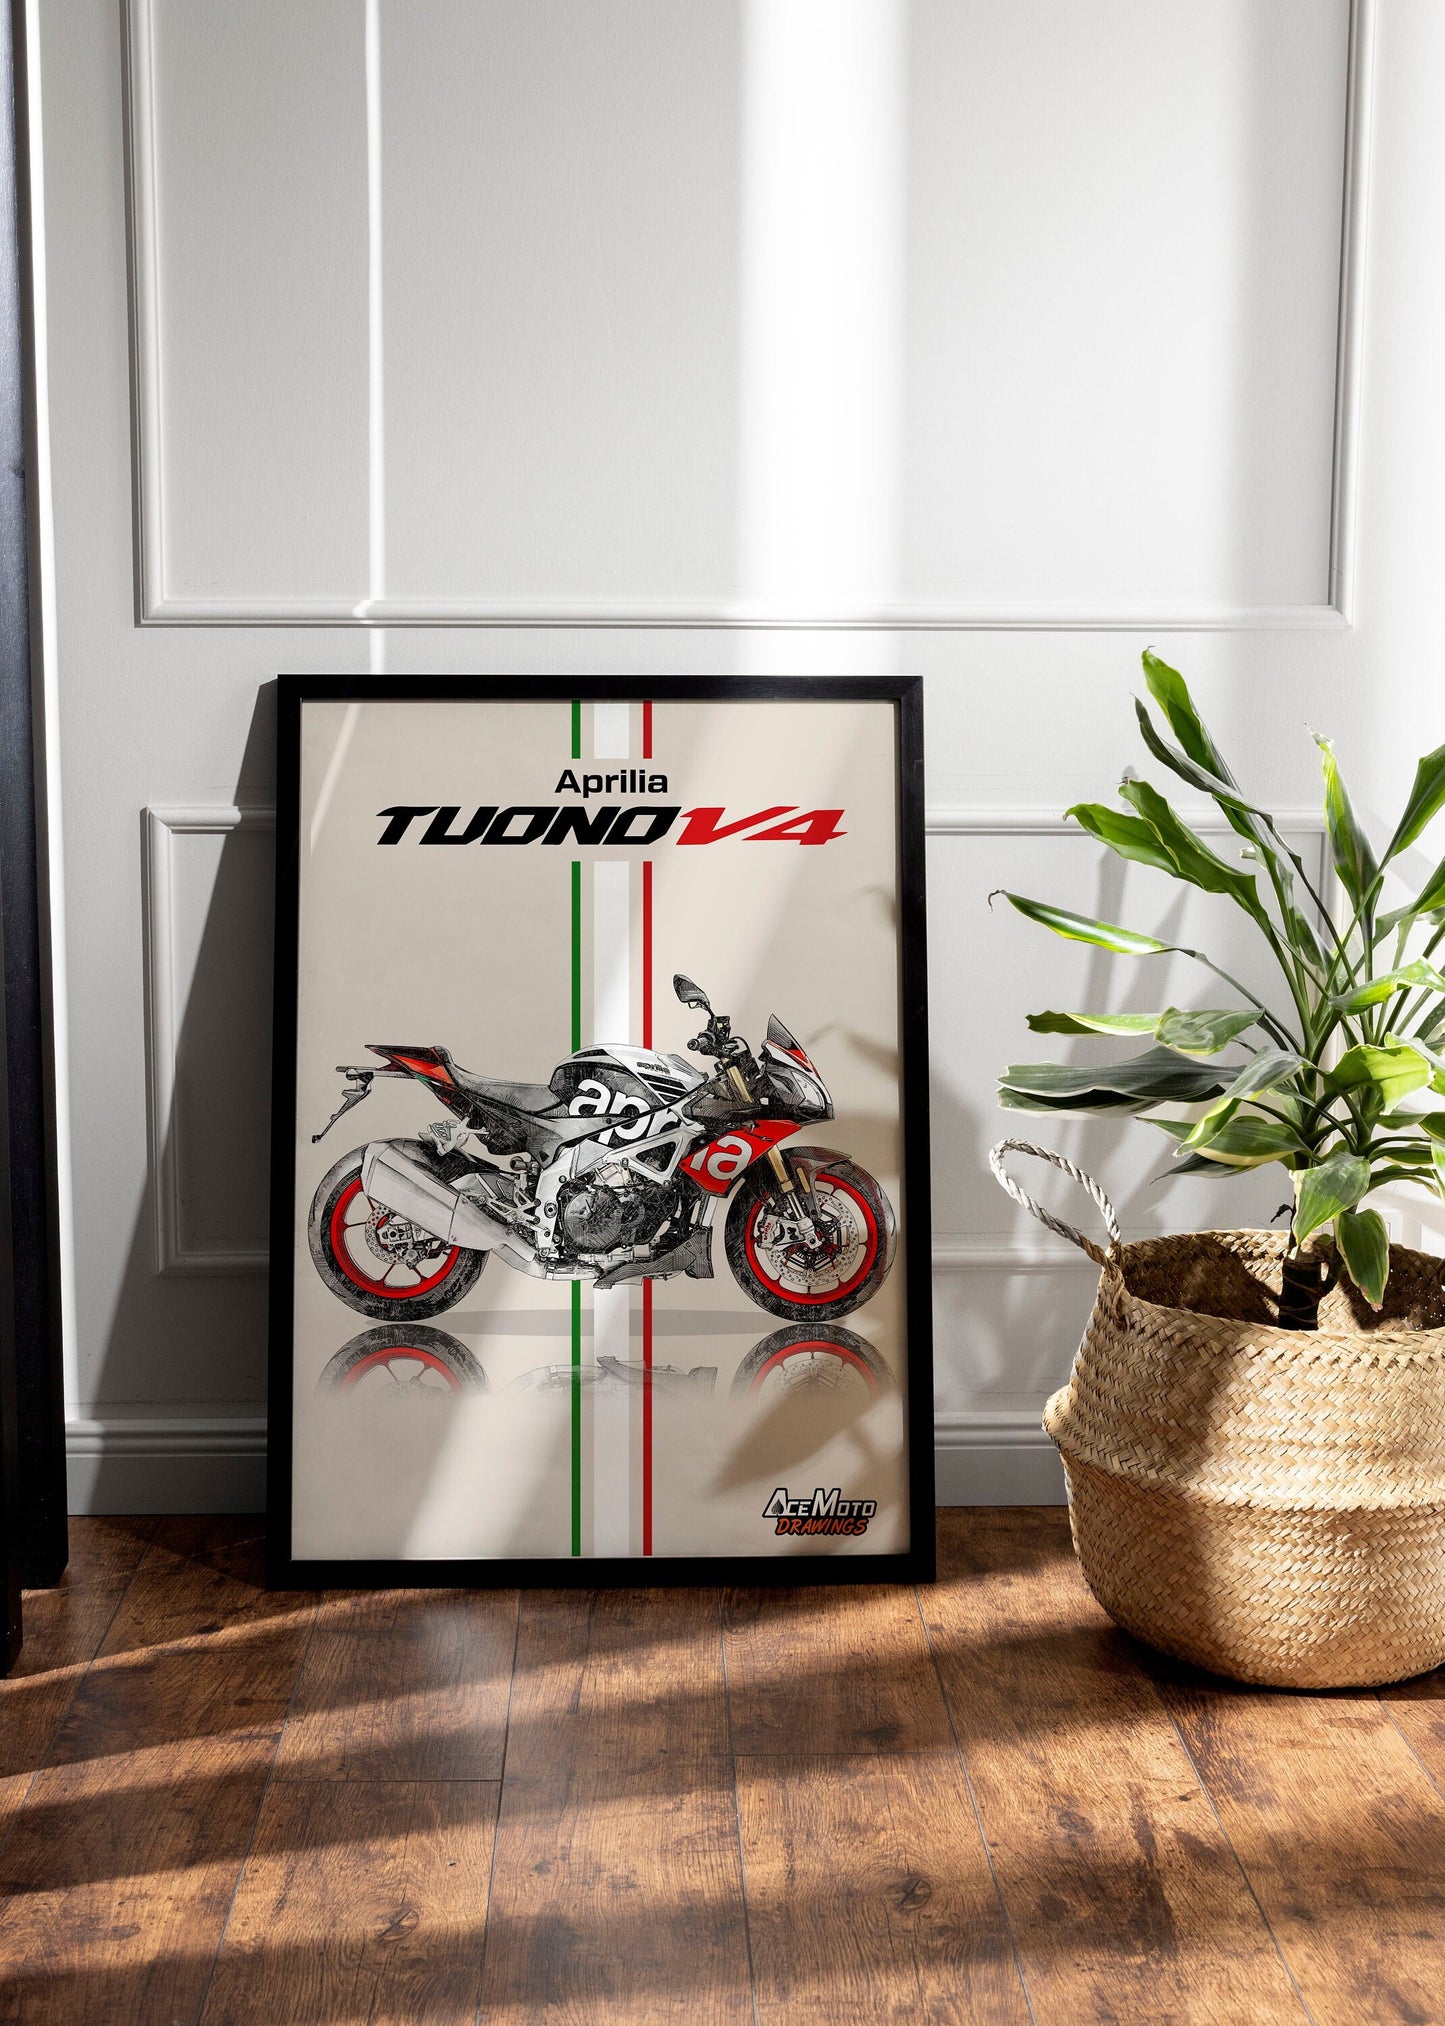 Aprilia Tuono V4 1100 Factory 2018 | Motorcycle Poster, Bike Wall Art Decor - Gift for Lovers Aprilia Rider PresentDrawing